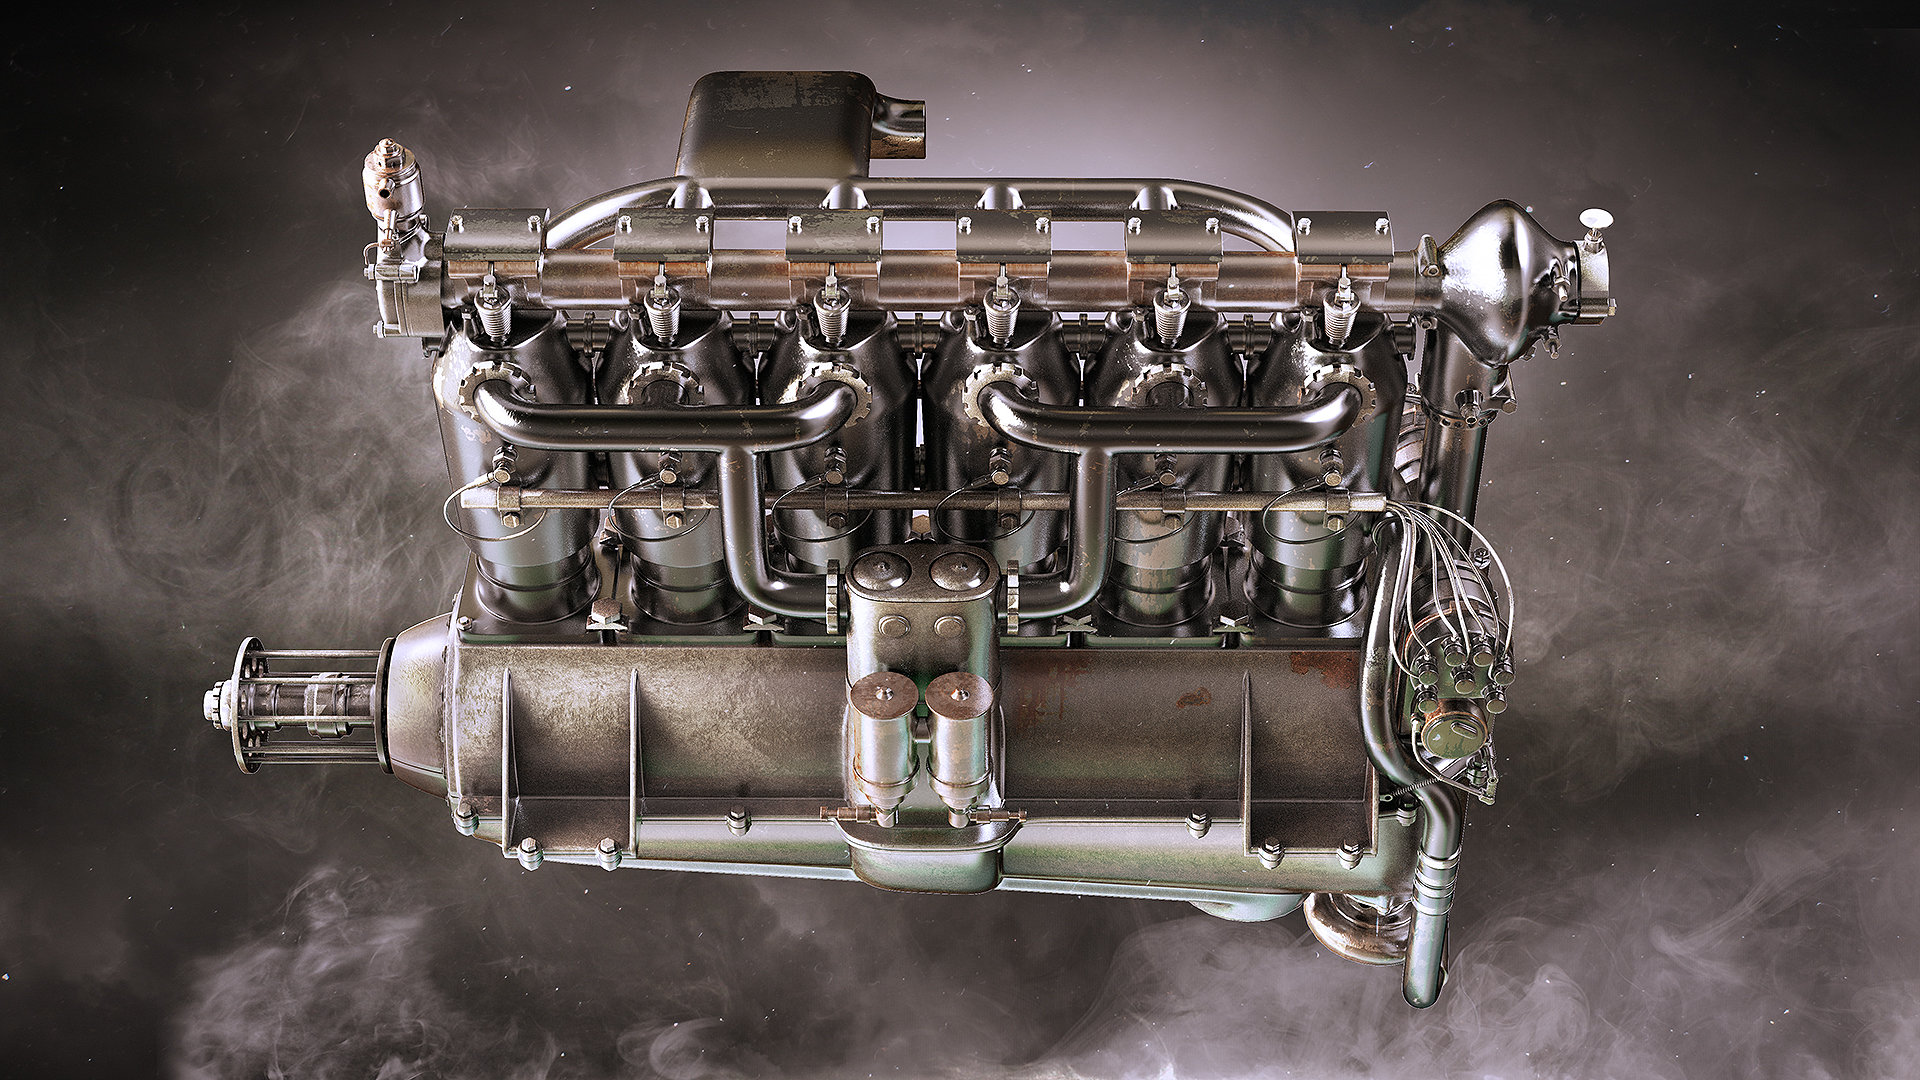 alexandr-novitskiy-mercedes-diii-engine-04.jpg?1438781025